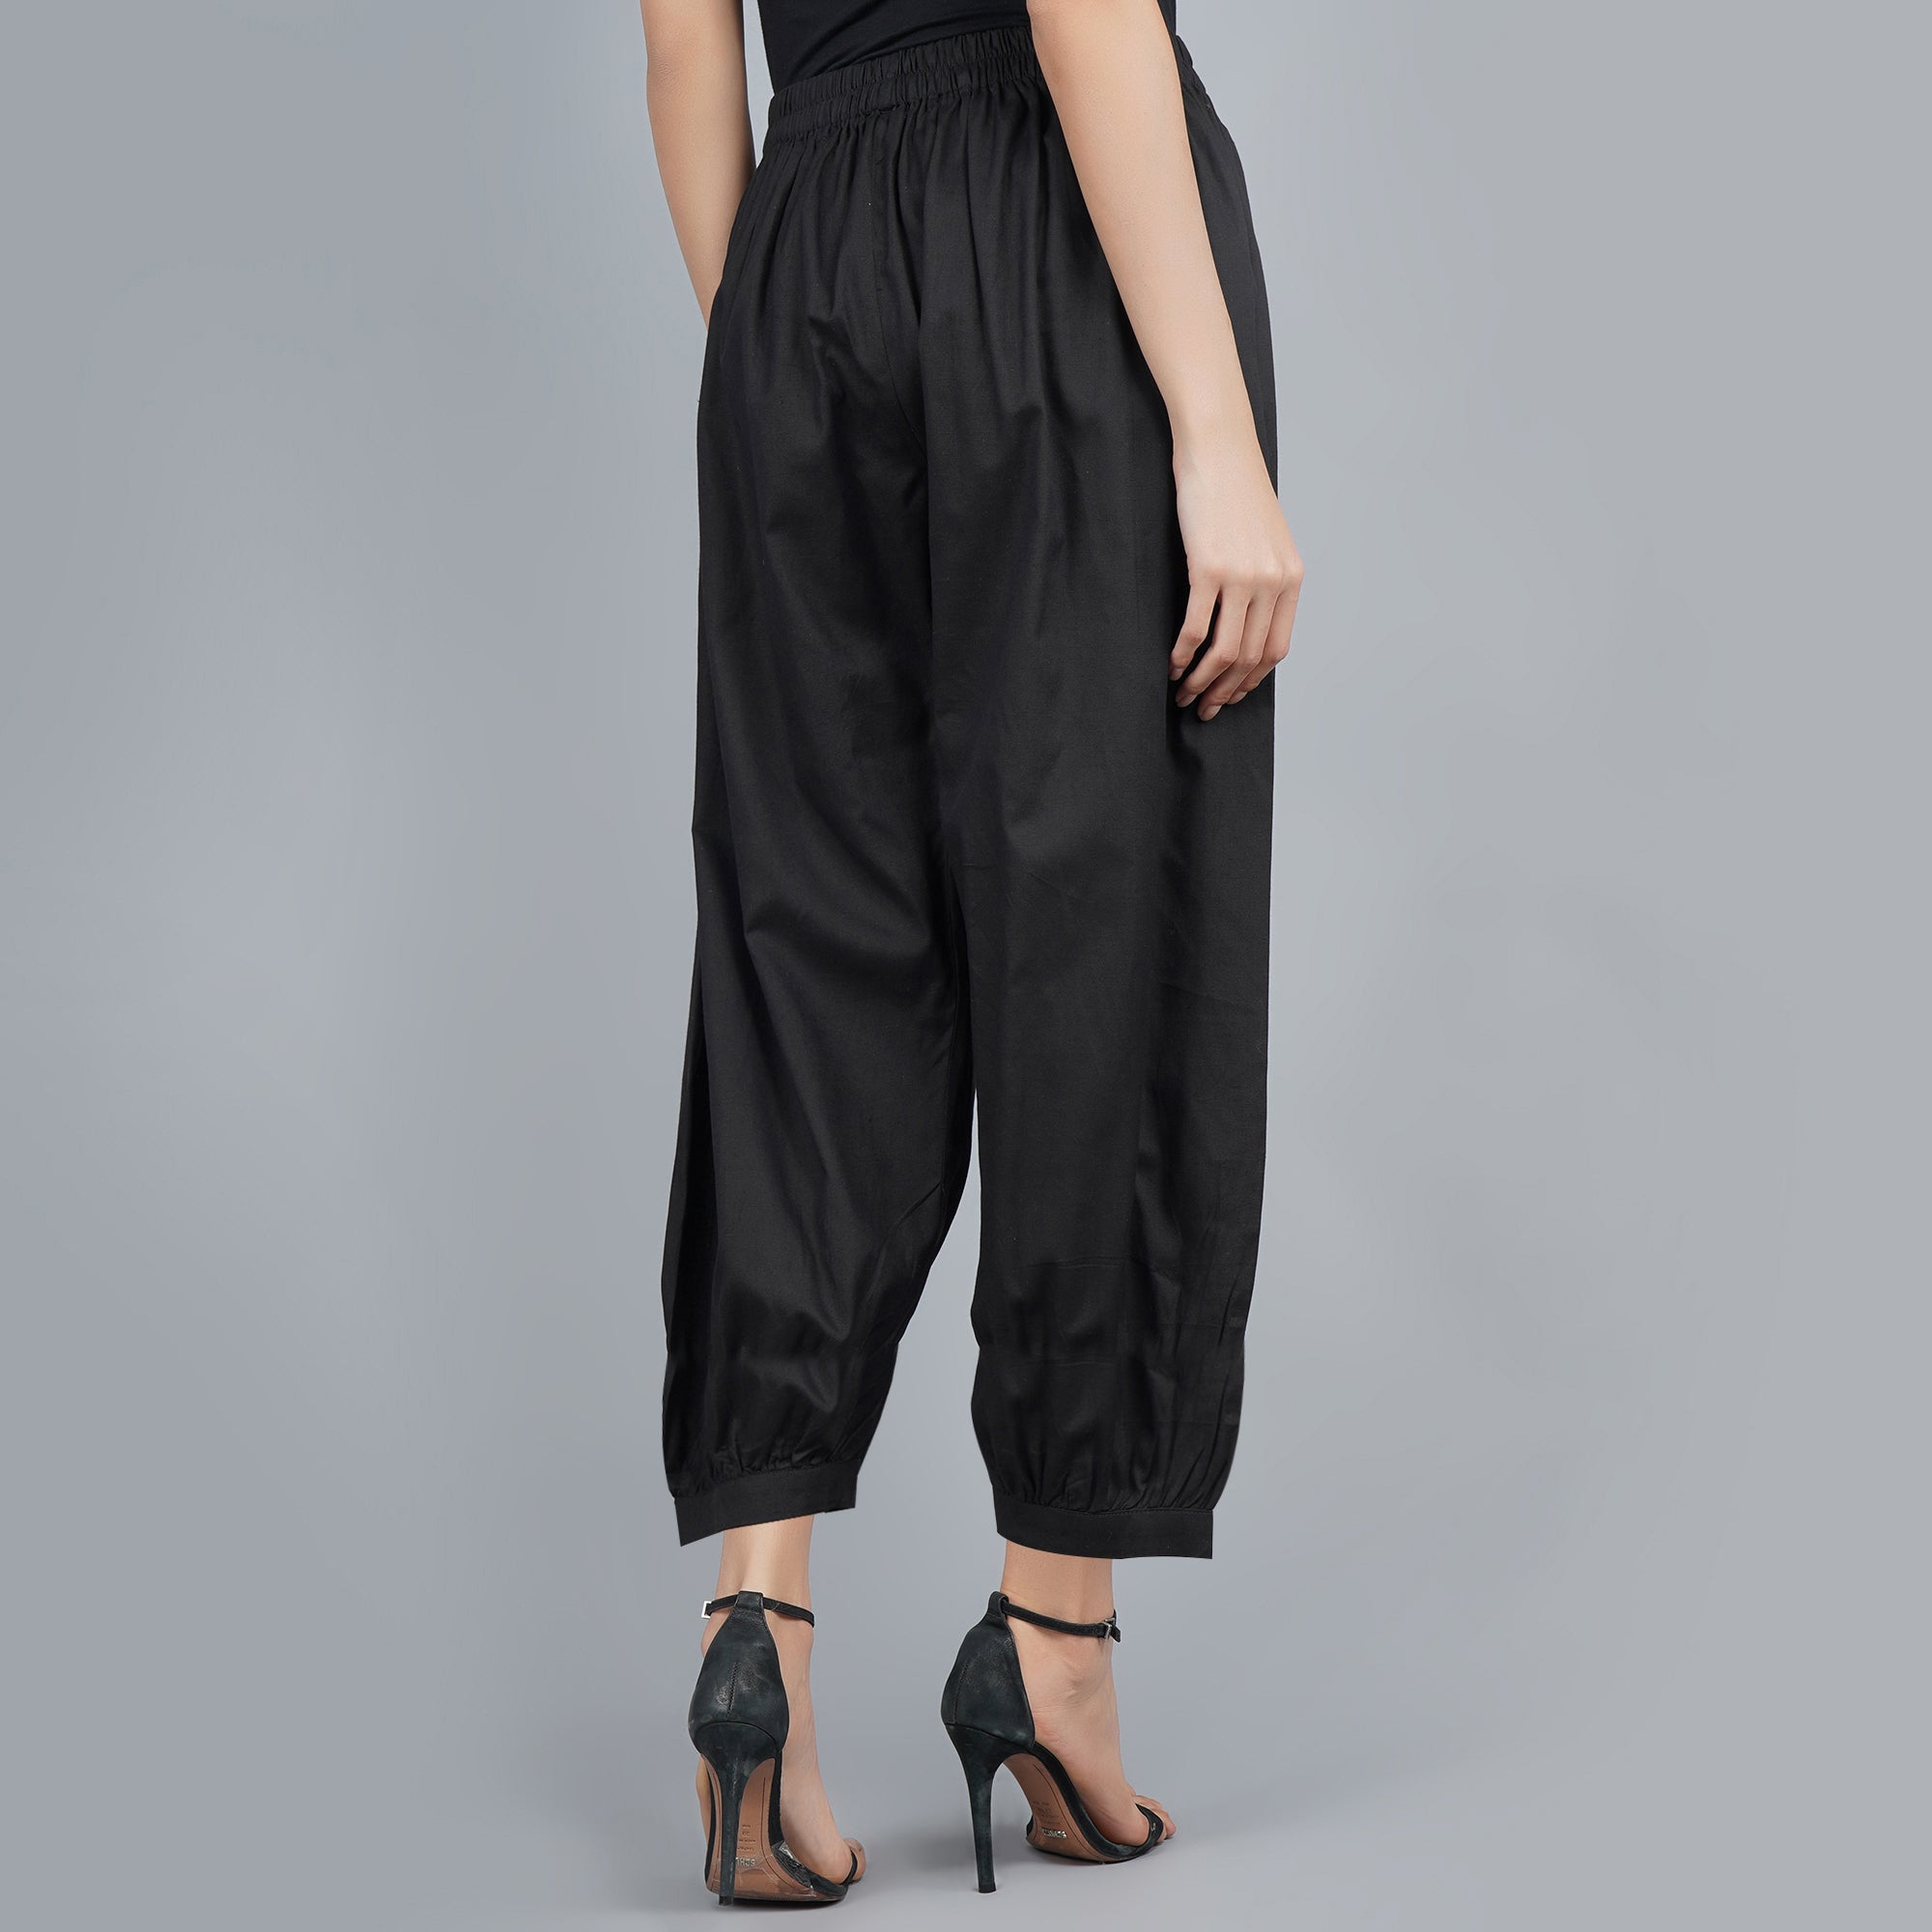 Printed Ladies Black Harem Pant, Waist Size: XL at Rs 130/piece in  Ahmedabad | ID: 26503640773